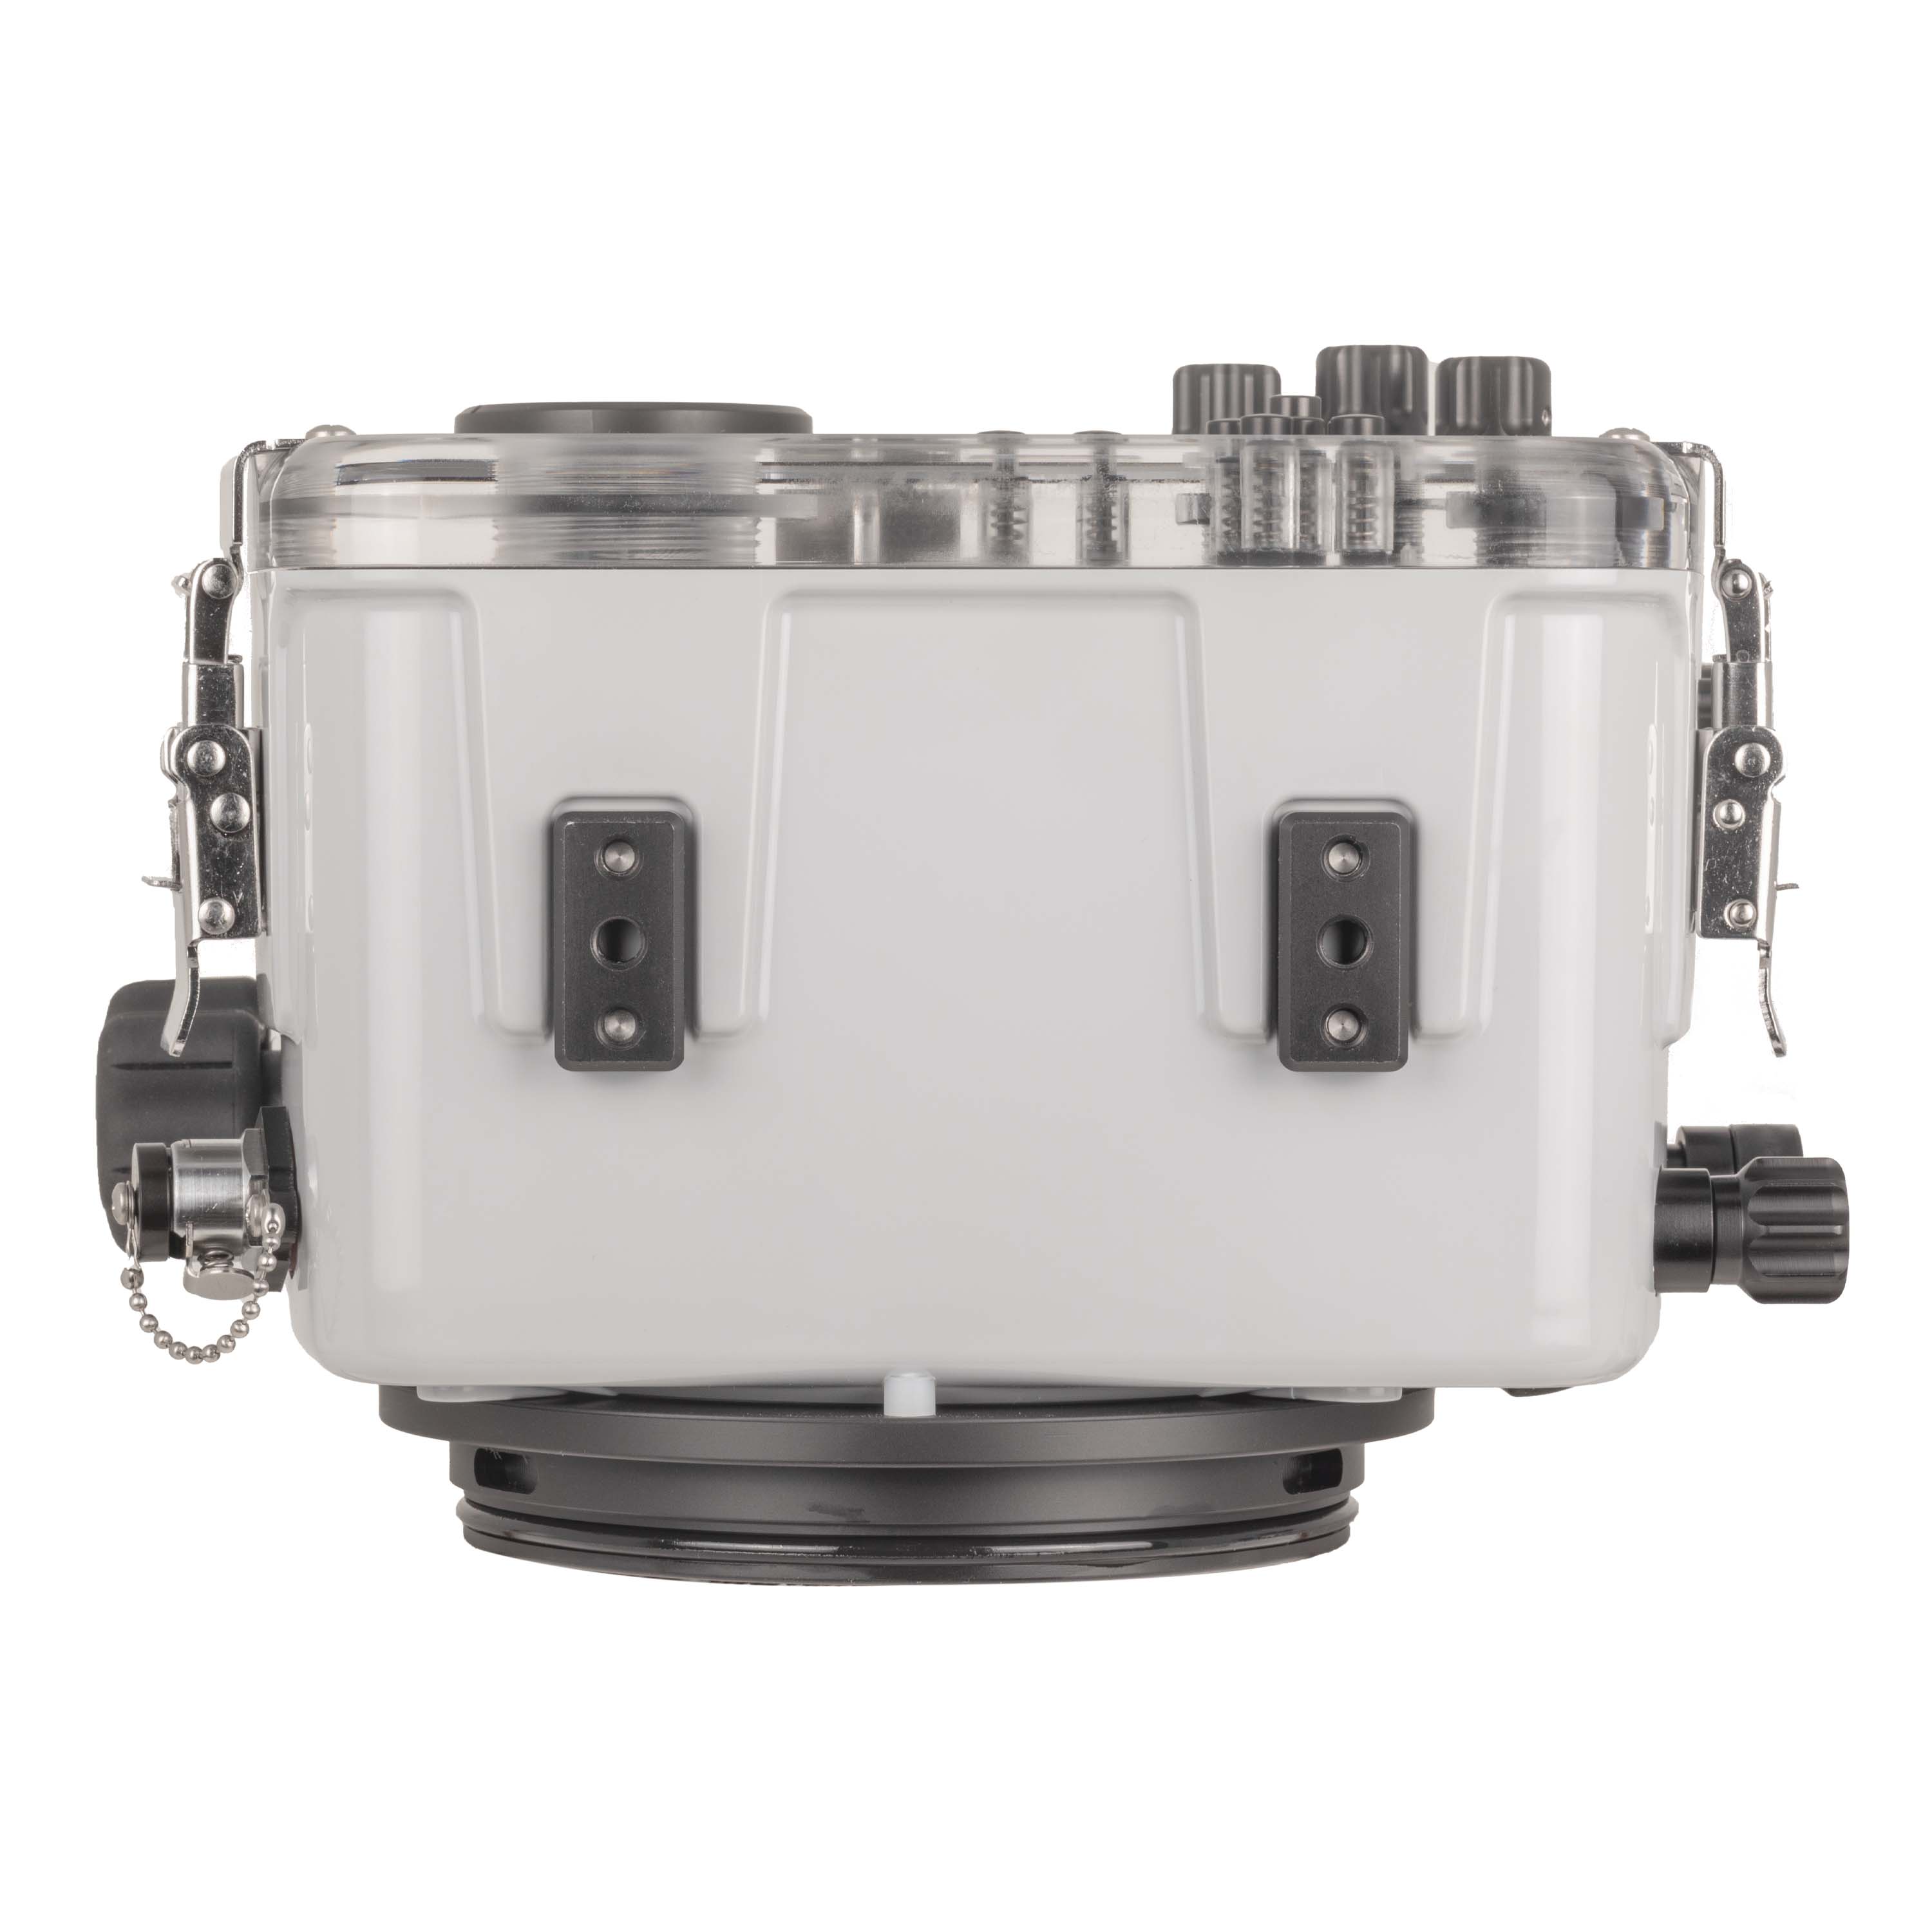 Ikelite 200DL Underwater Housing for Sony a7C II, a7CR Mirrorless Digital Cameras